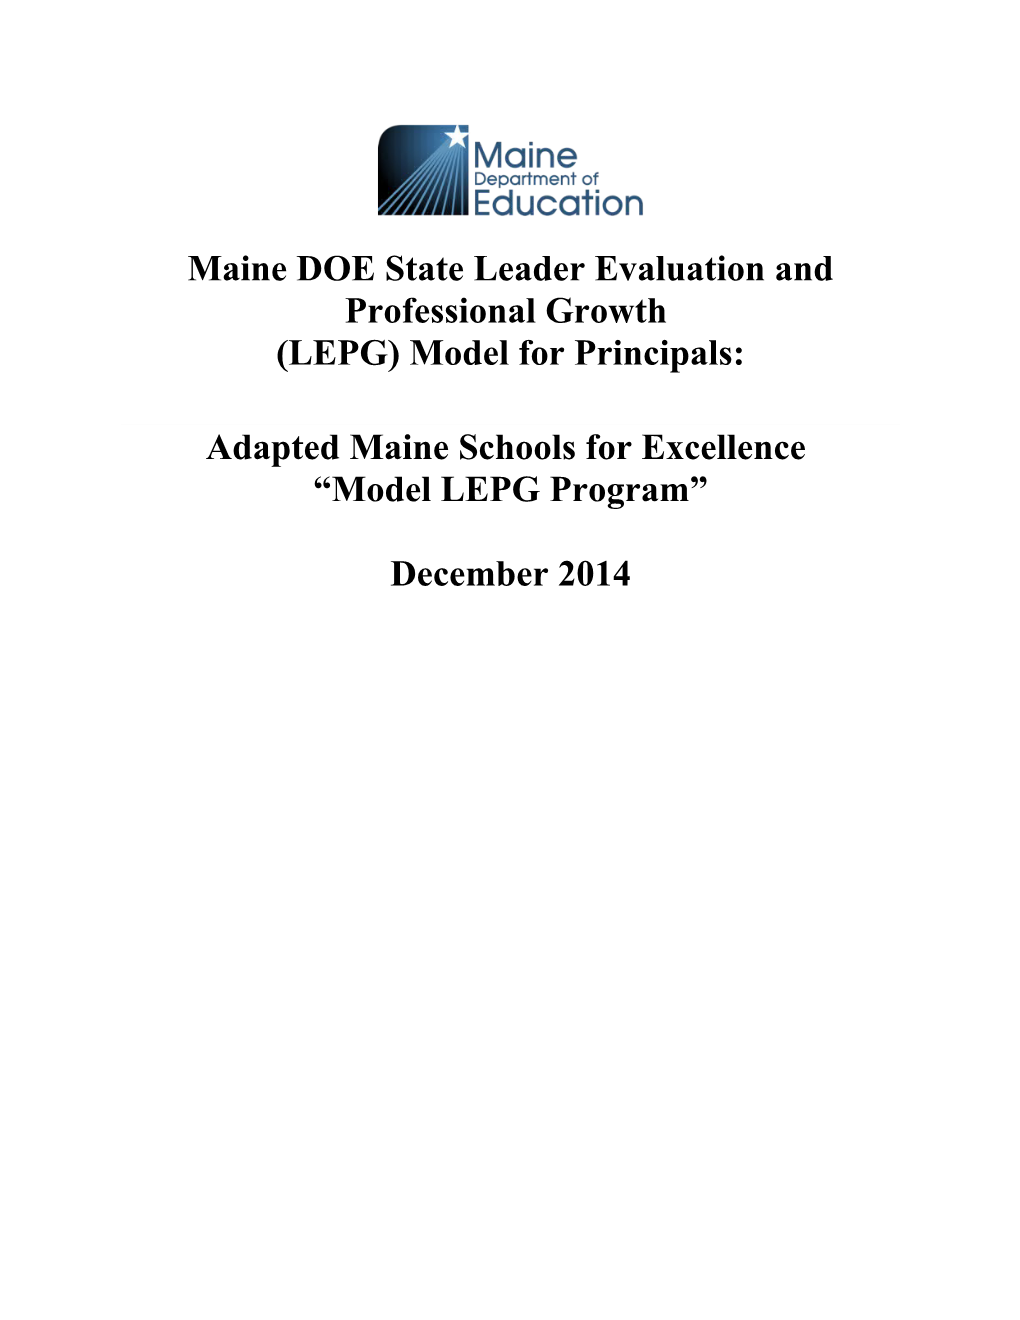 (LEPG) Model for Principals